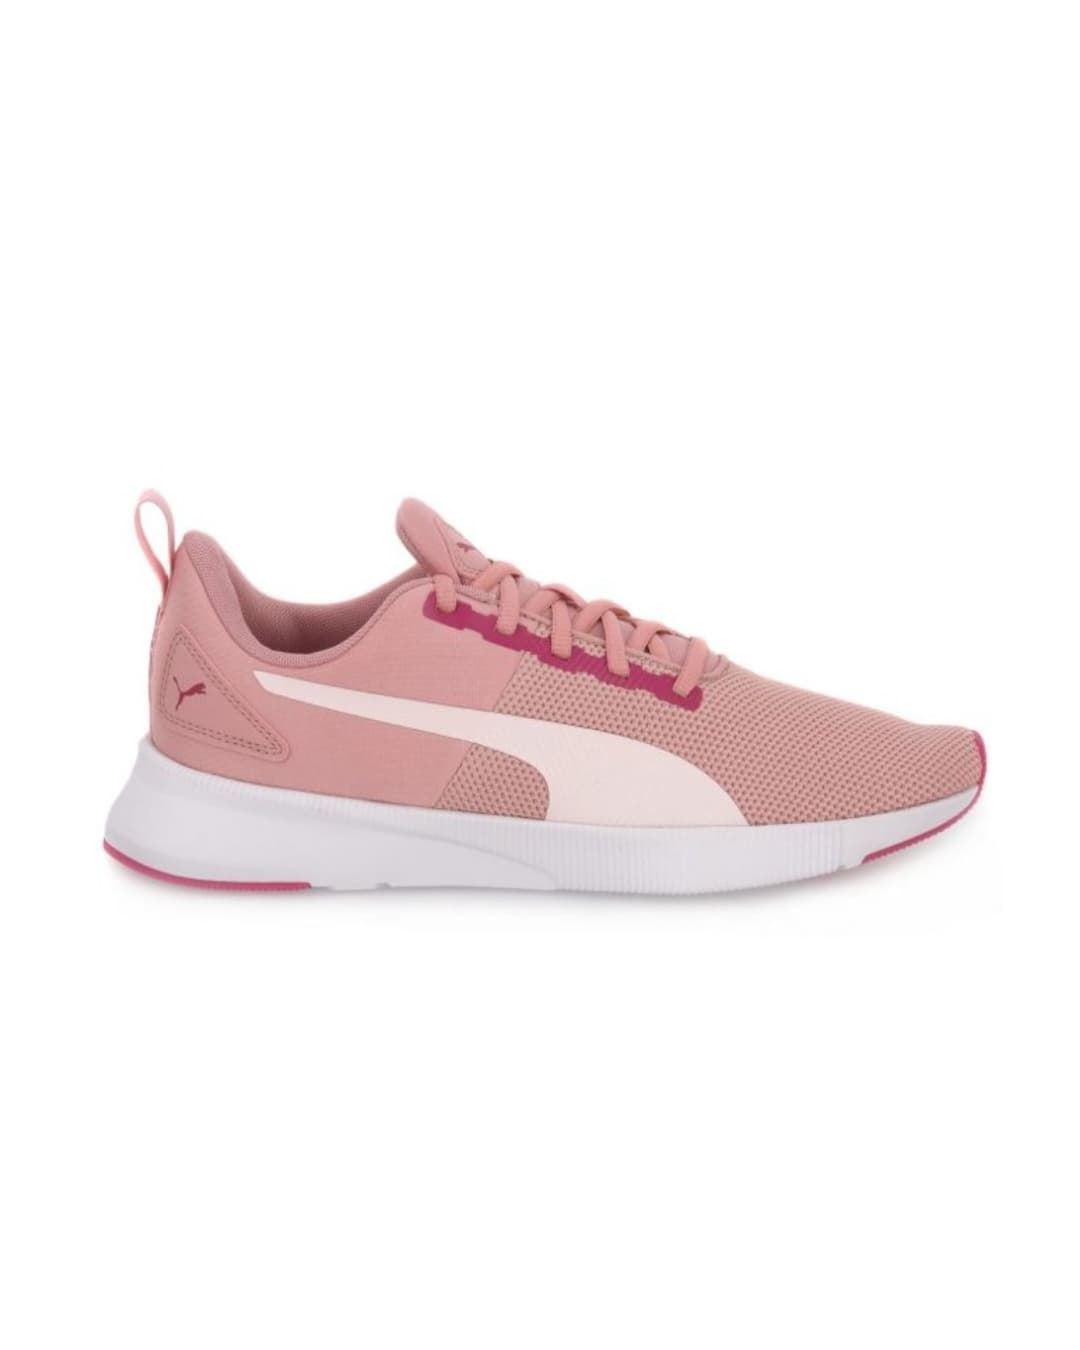 Puma Flyer Runner Jr Pink Sneakers - Image 1